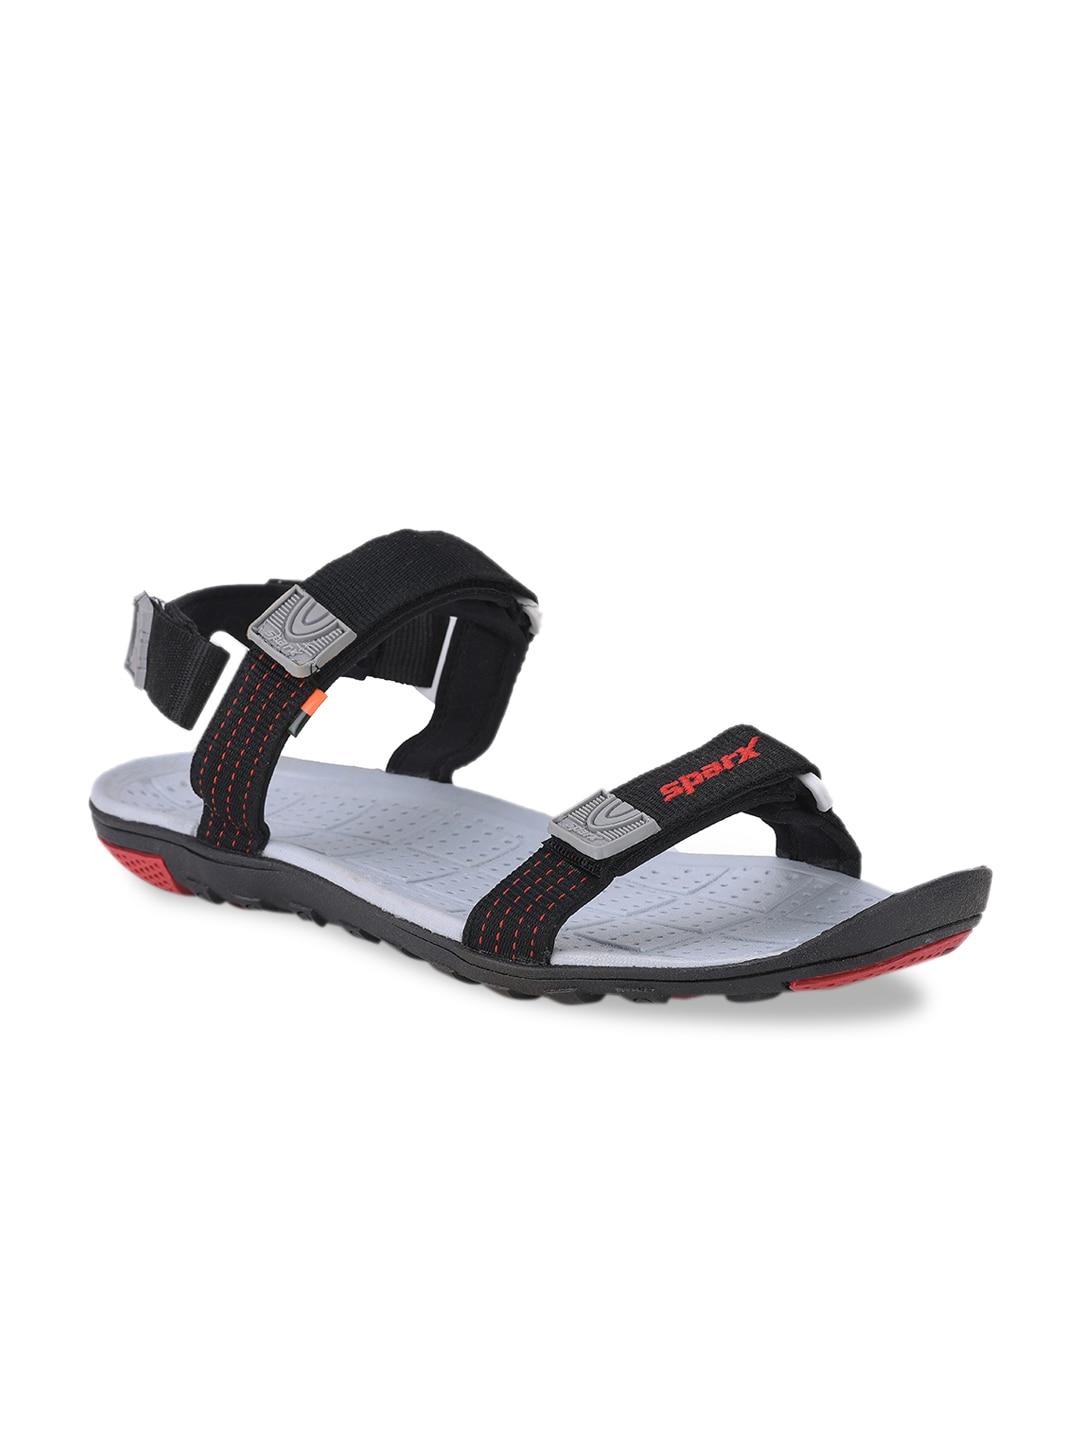 Sparx SS-414 Men Black & Red Sports Sandals